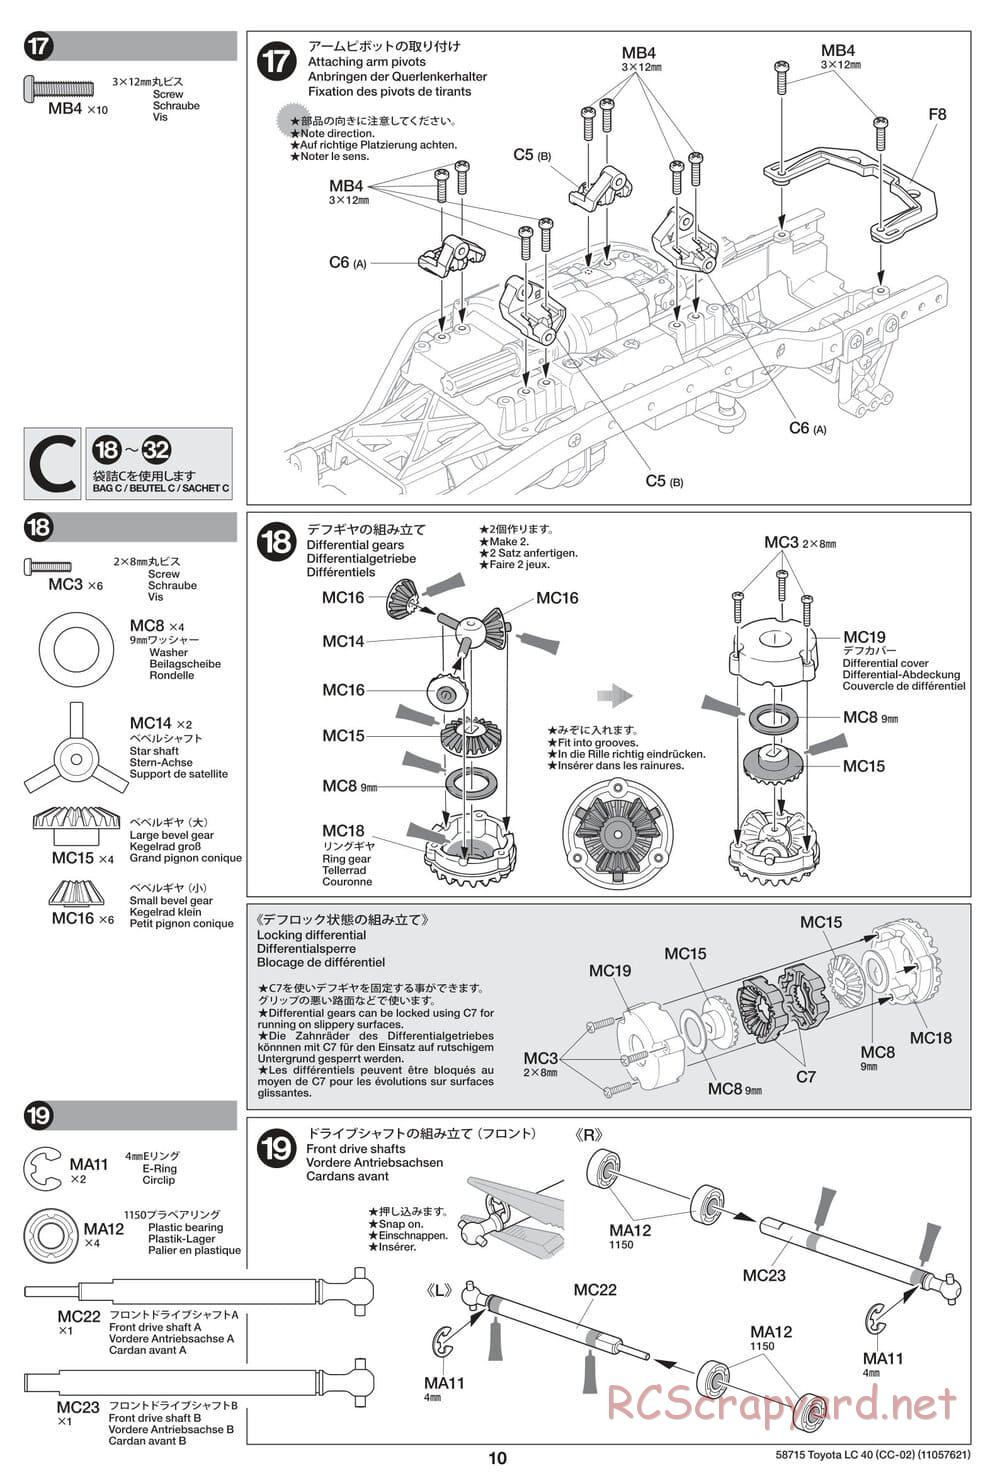 Tamiya - Toyota Land Cruiser 40 - CC-02 Chassis - Manual - Page 10